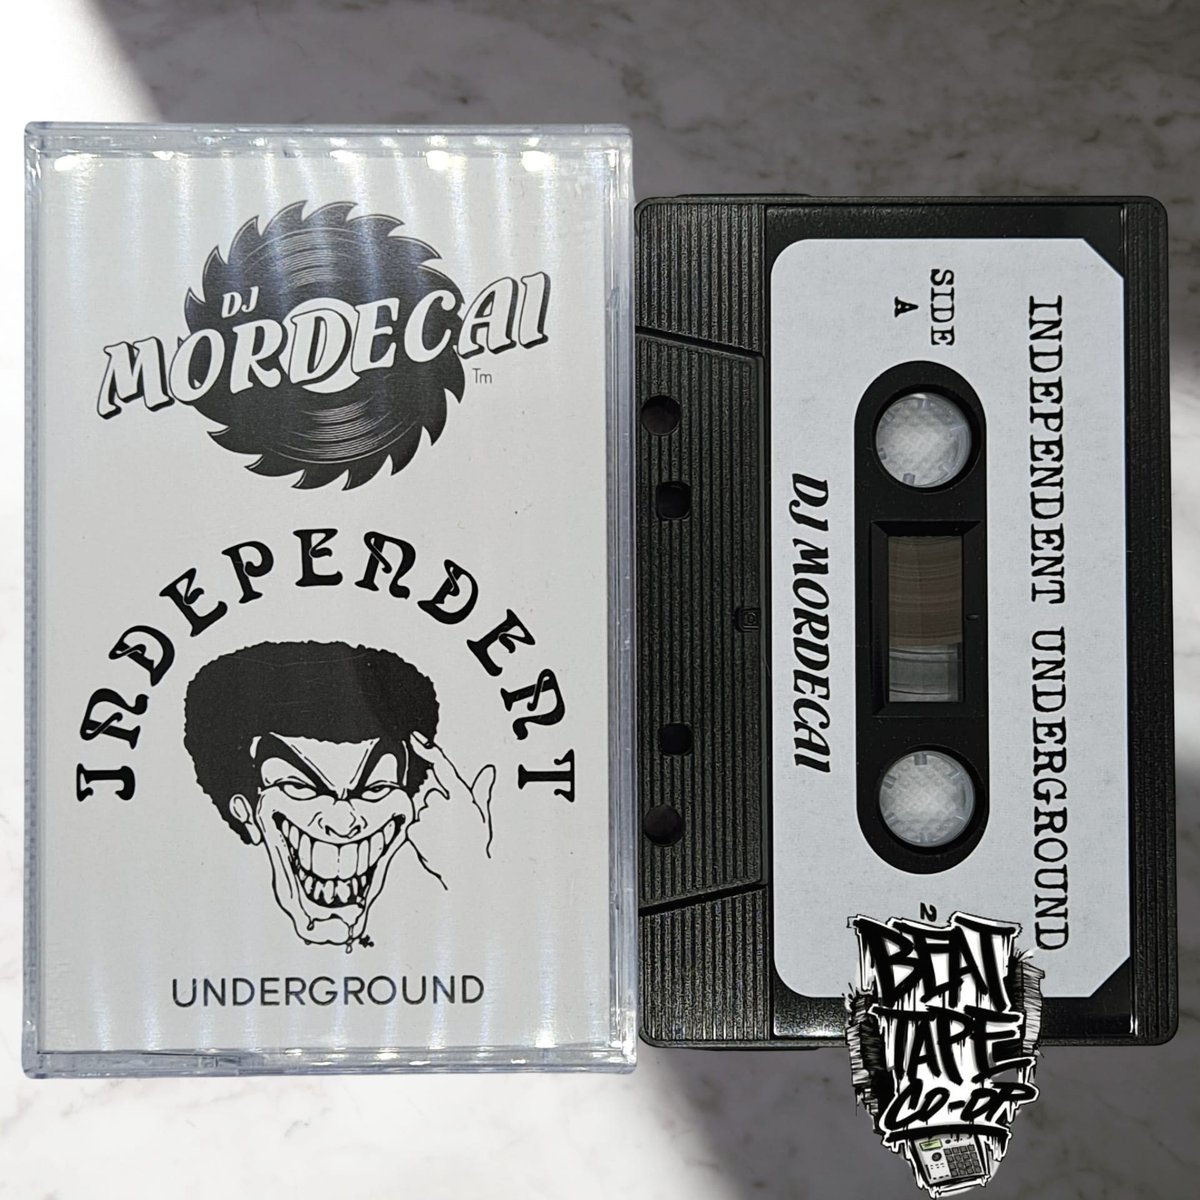 DJ Mordecai - INDEPENDENT UNDERGROUND

Released On: August 28, 2023

Bandcamp: djmordecai.bandcamp.com/album/independ…

#djmordecai #hiphop #independenthiphop #undergroundhiphop #mixtape #boombap #companyflow  #blackattack #koolkeith #streetsmartz #binarystar #cassette #tape  #beattapecoop